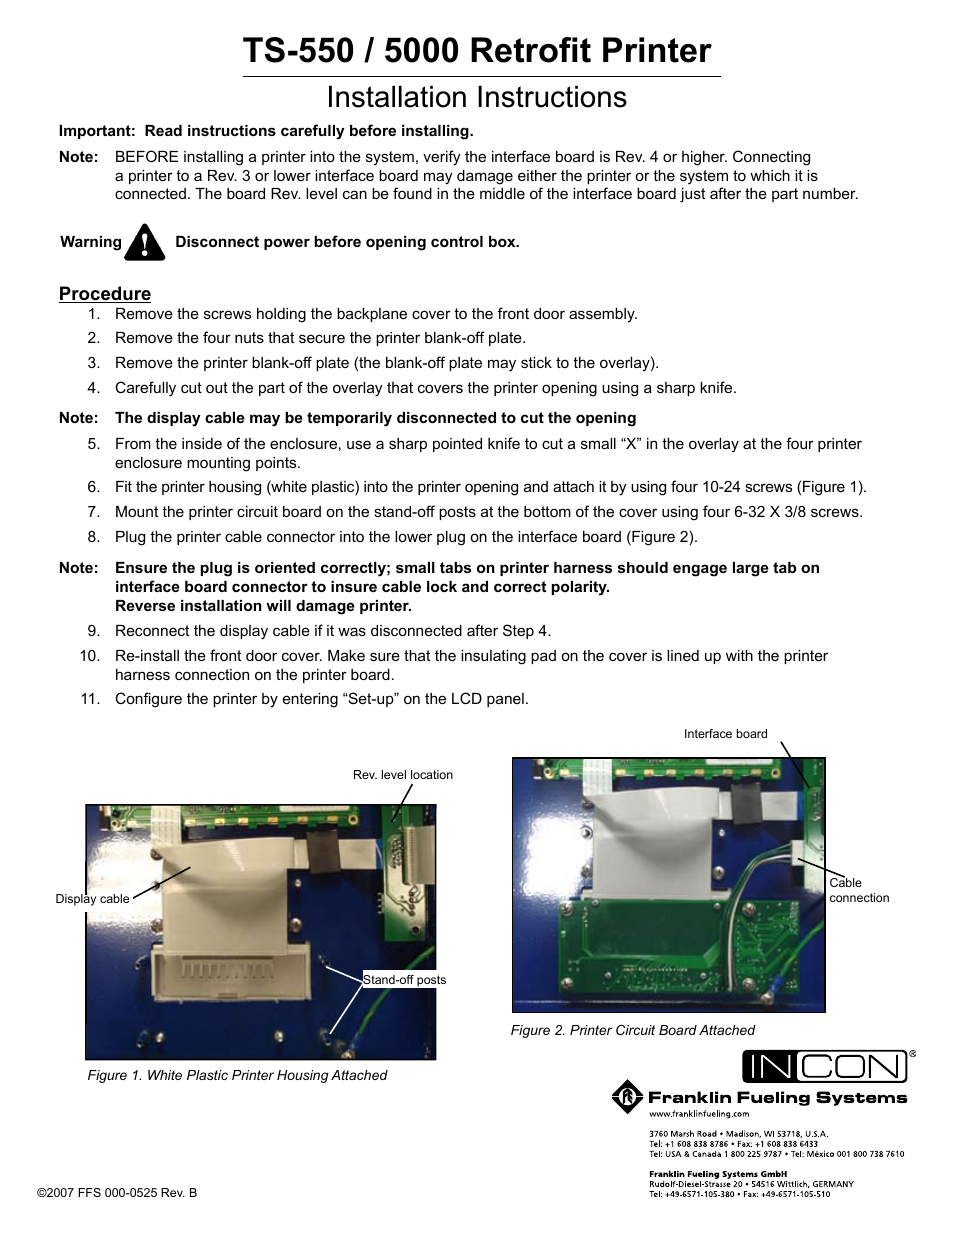 TS-550/TS-5000 Retrofit Printer Installation